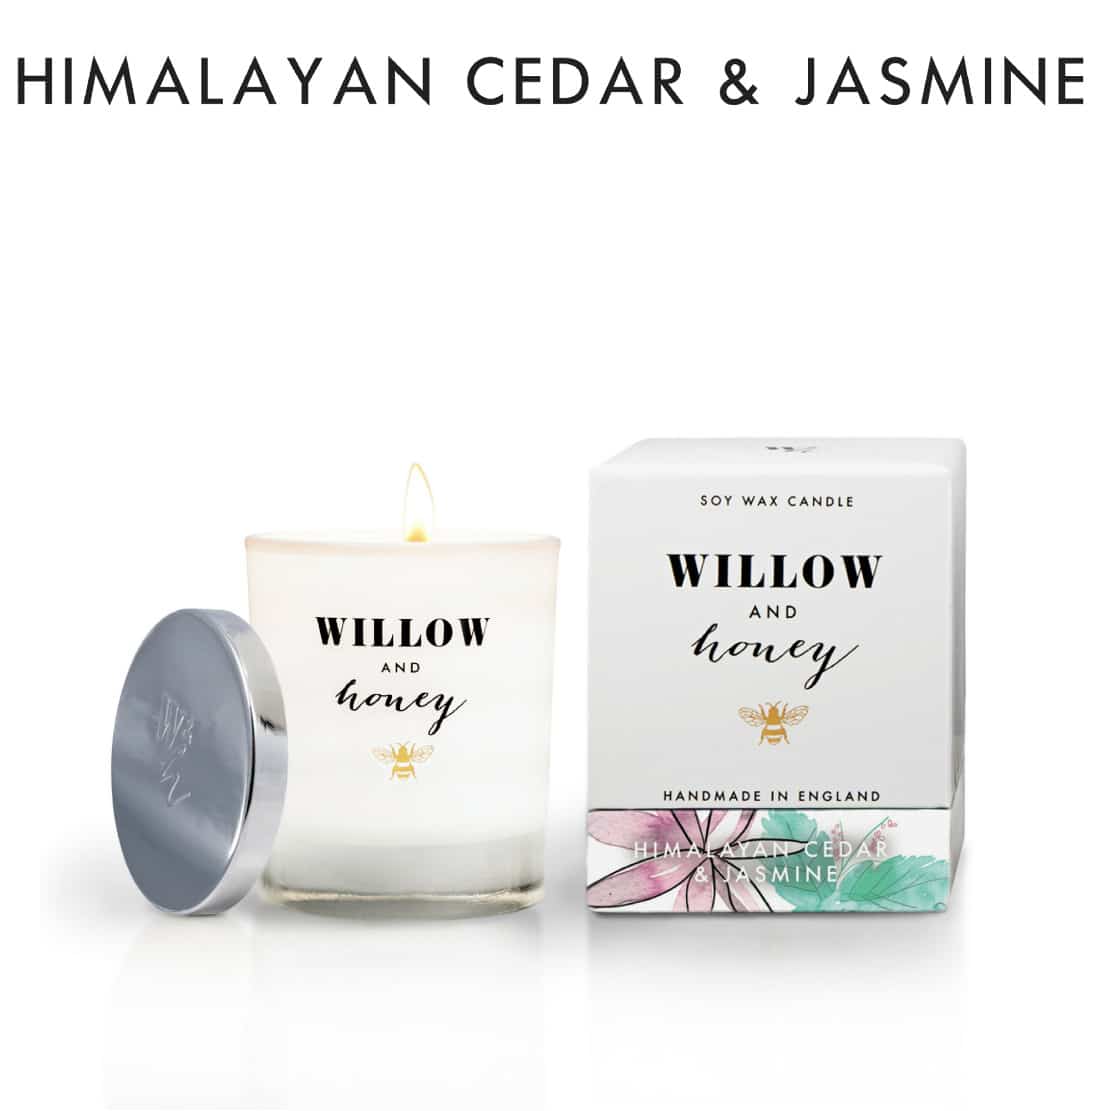 Willow and Honey Himalayan Cedar and Jasmine Candle 220g